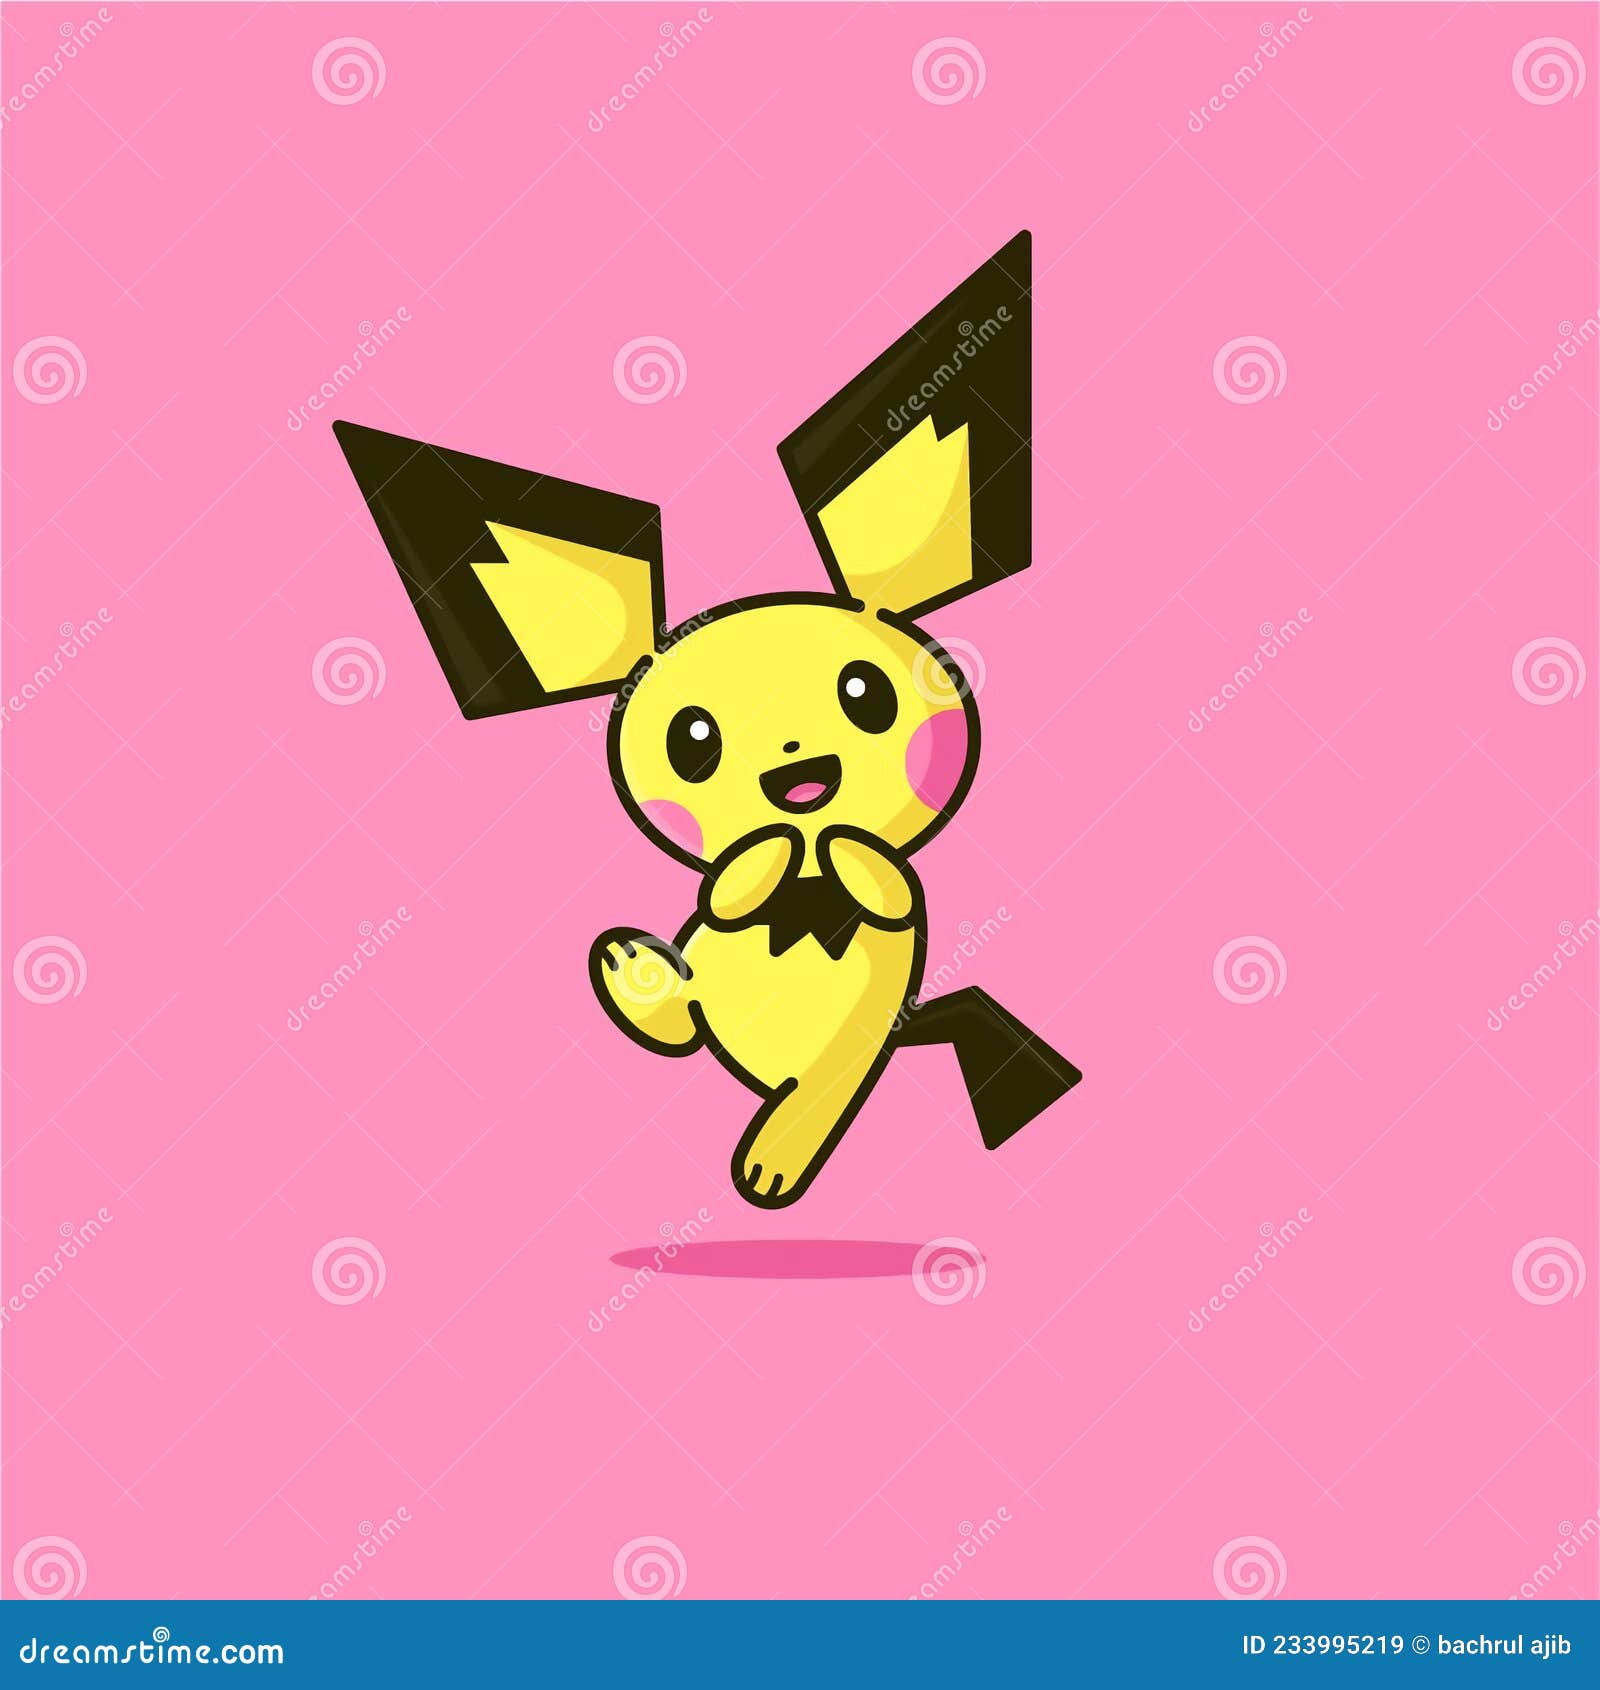 Cute pikachu illustration stock illustration. Illustration of cute -  233995219